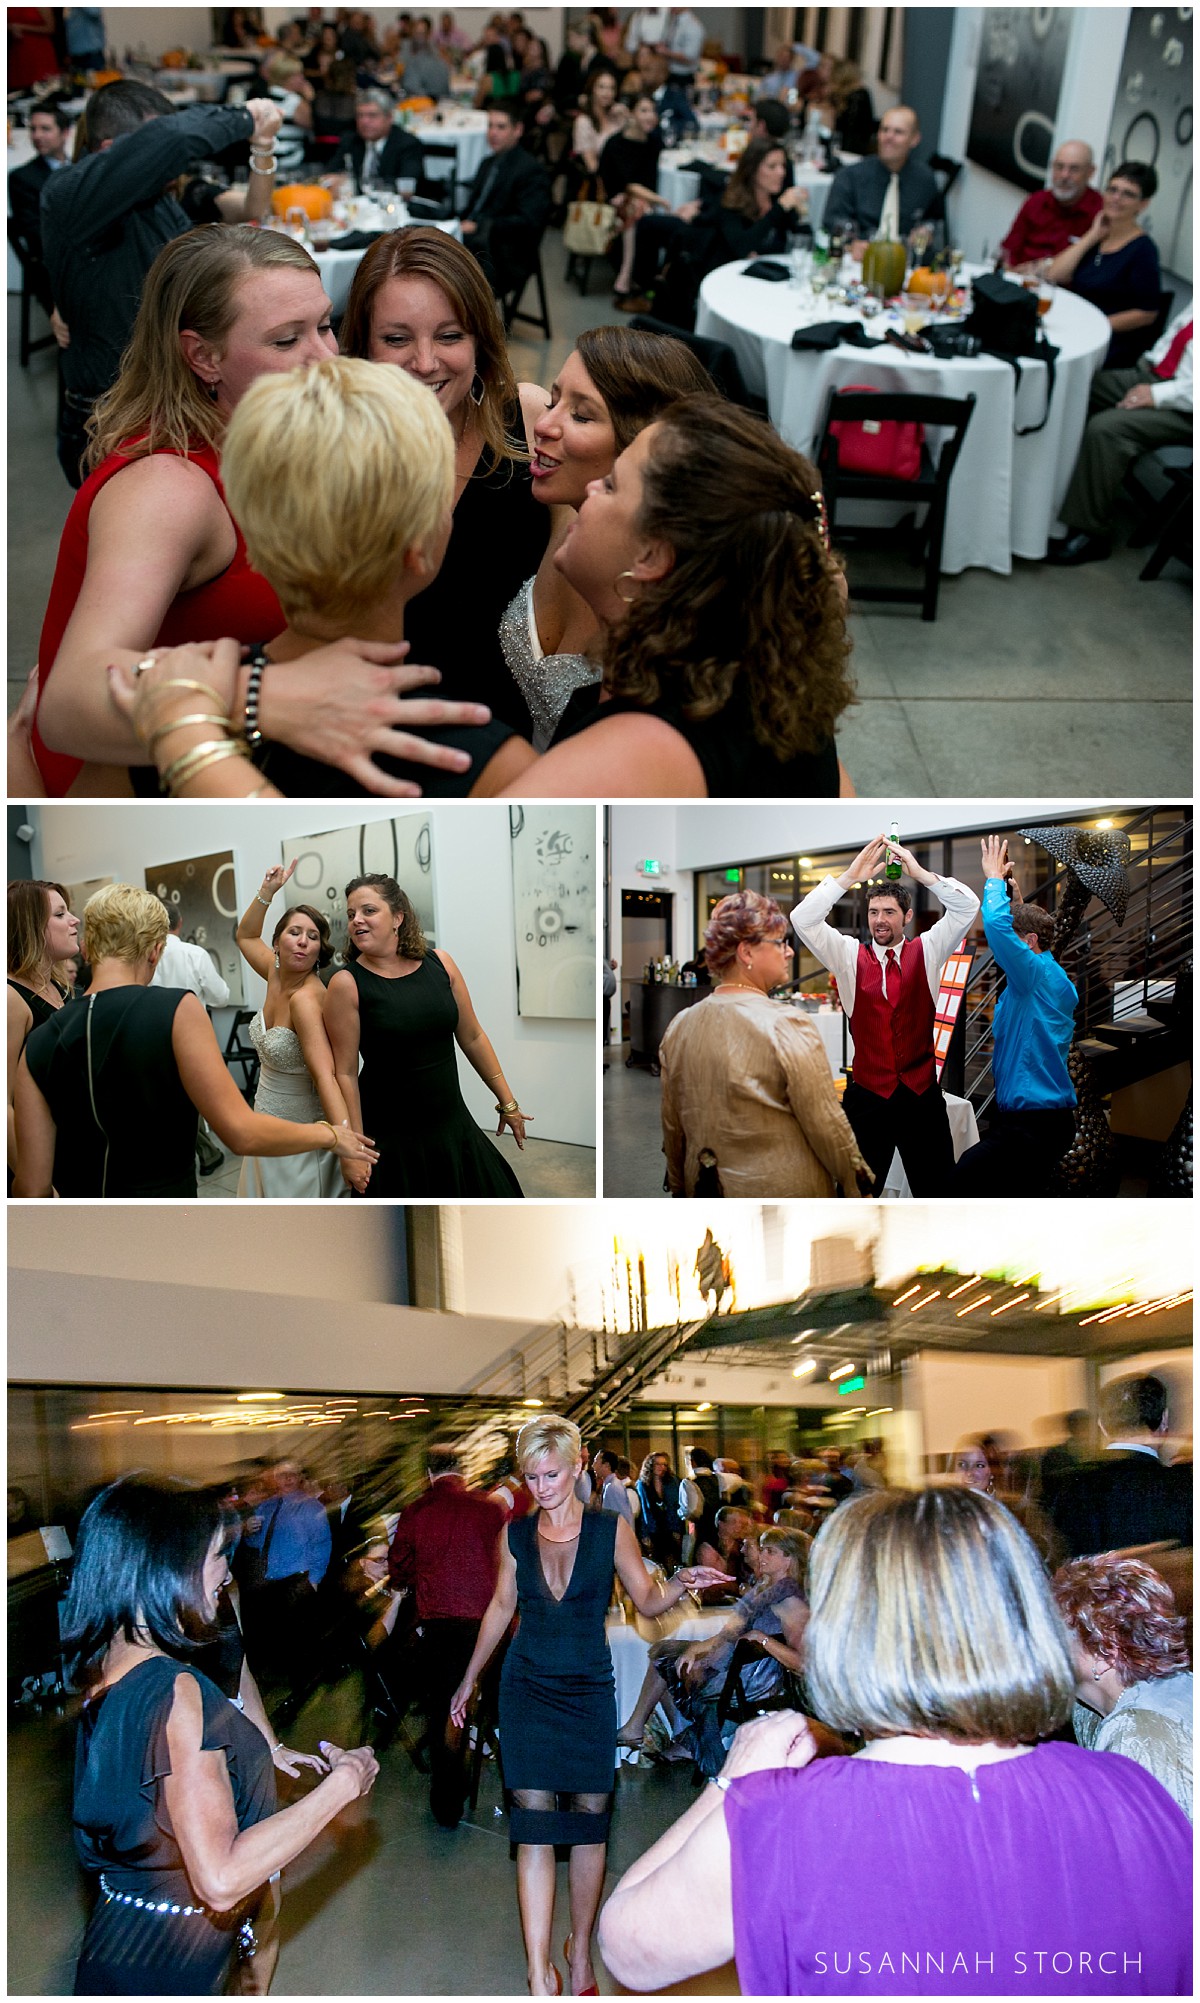 4 images of wedding reception dancing